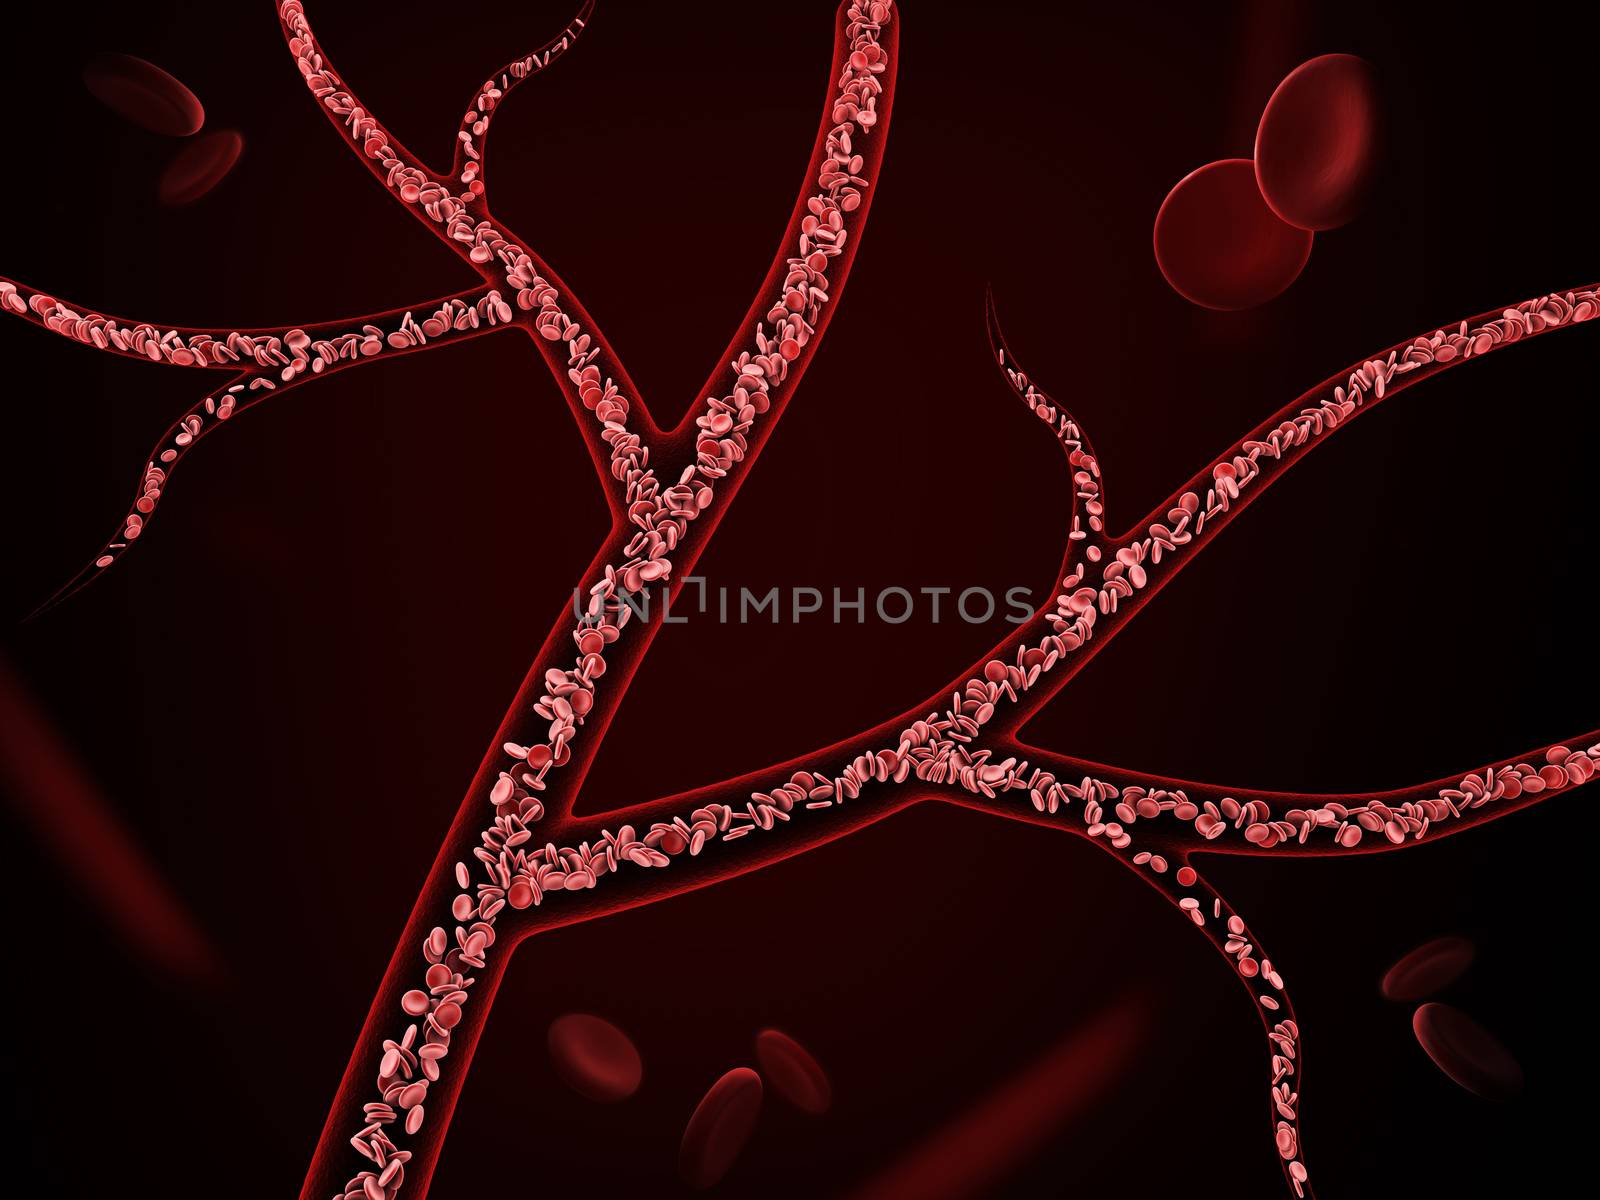 3d Illustration of red blood cells in vein on black background.